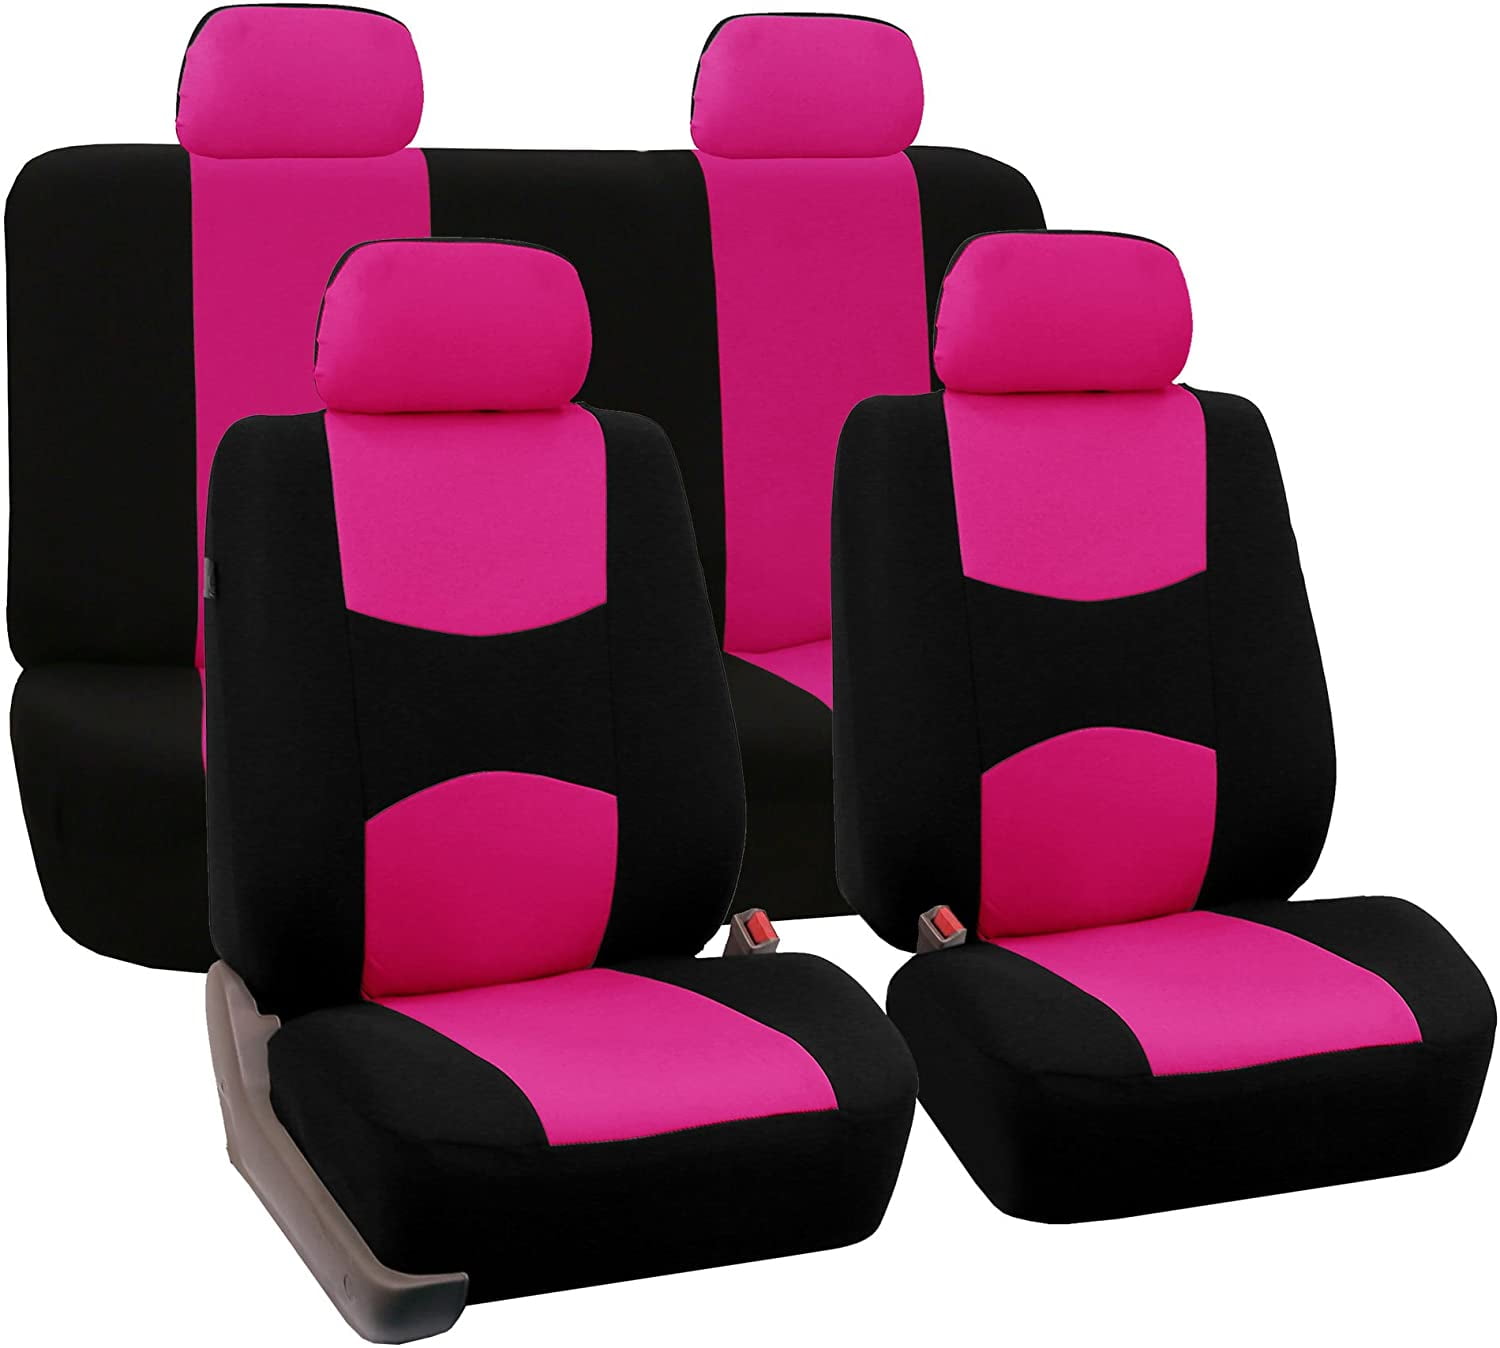 Oem Split Fold Truck Suv Bqx Solid Black Complete Full Car Seat Covers Set 